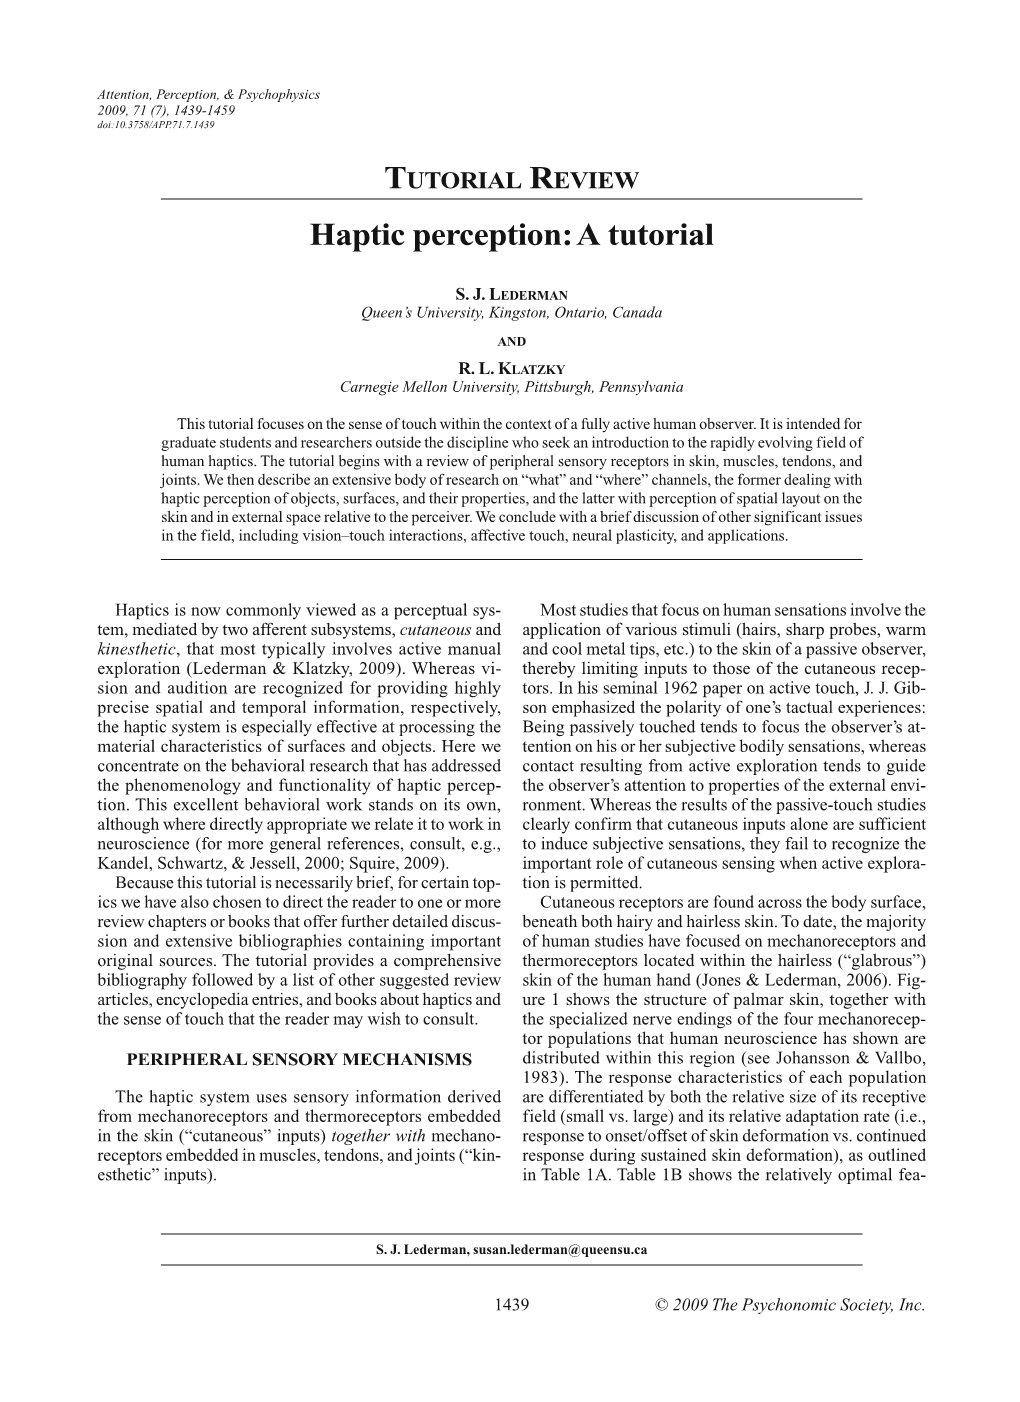 Haptic Perception: a Tutorial